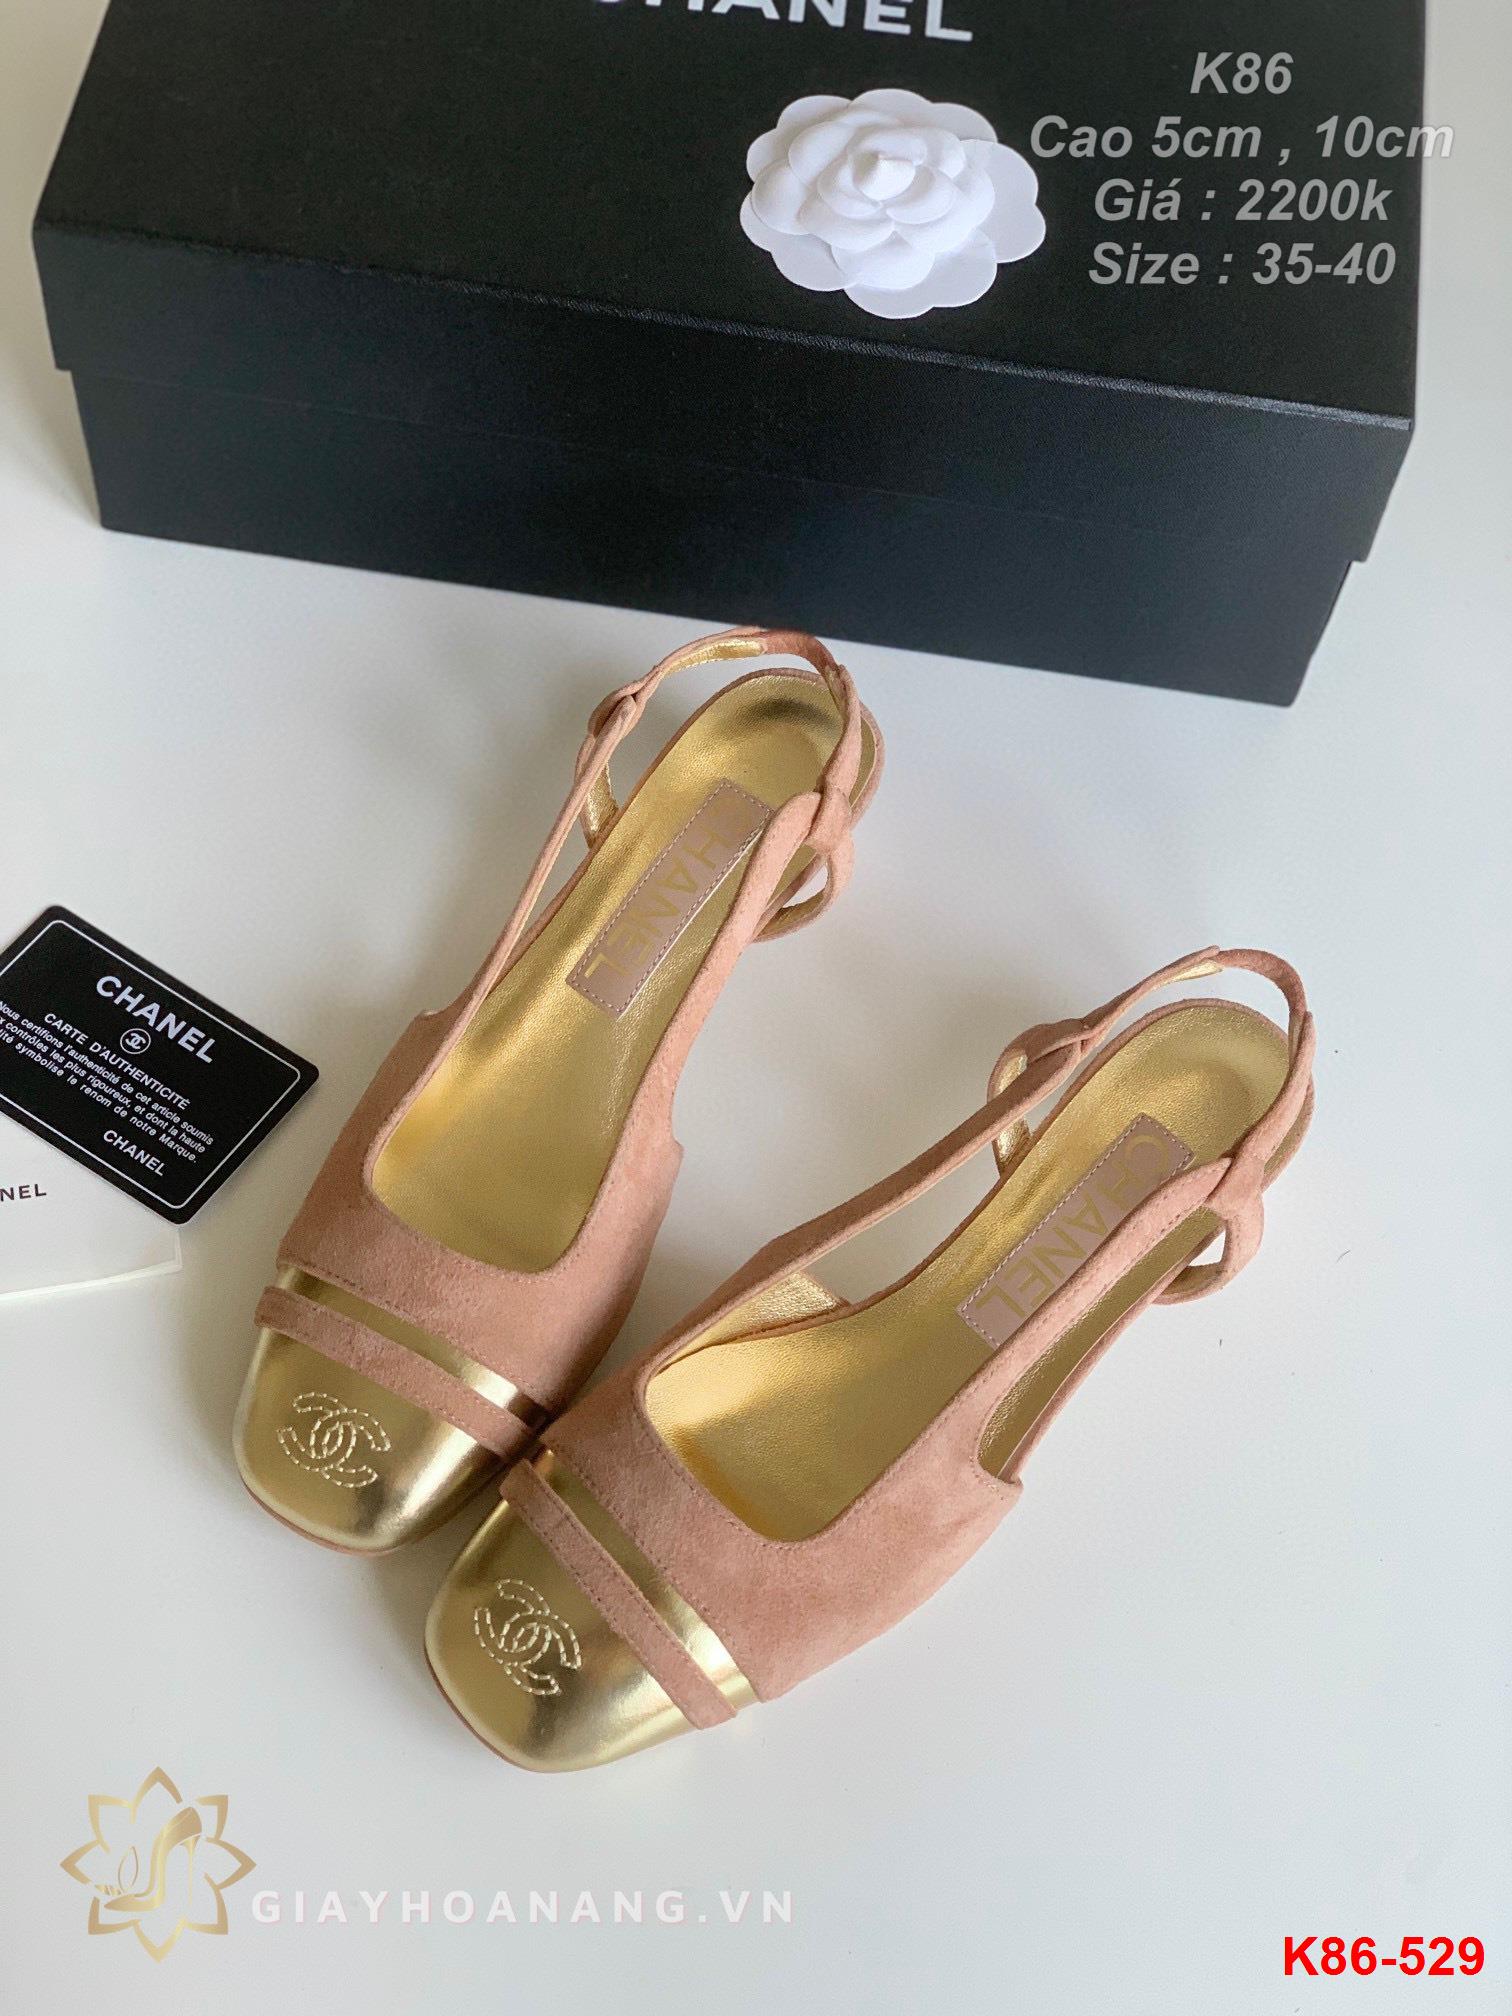 K86-529 Chanel sandal cao 5cm , 10cm siêu cấp